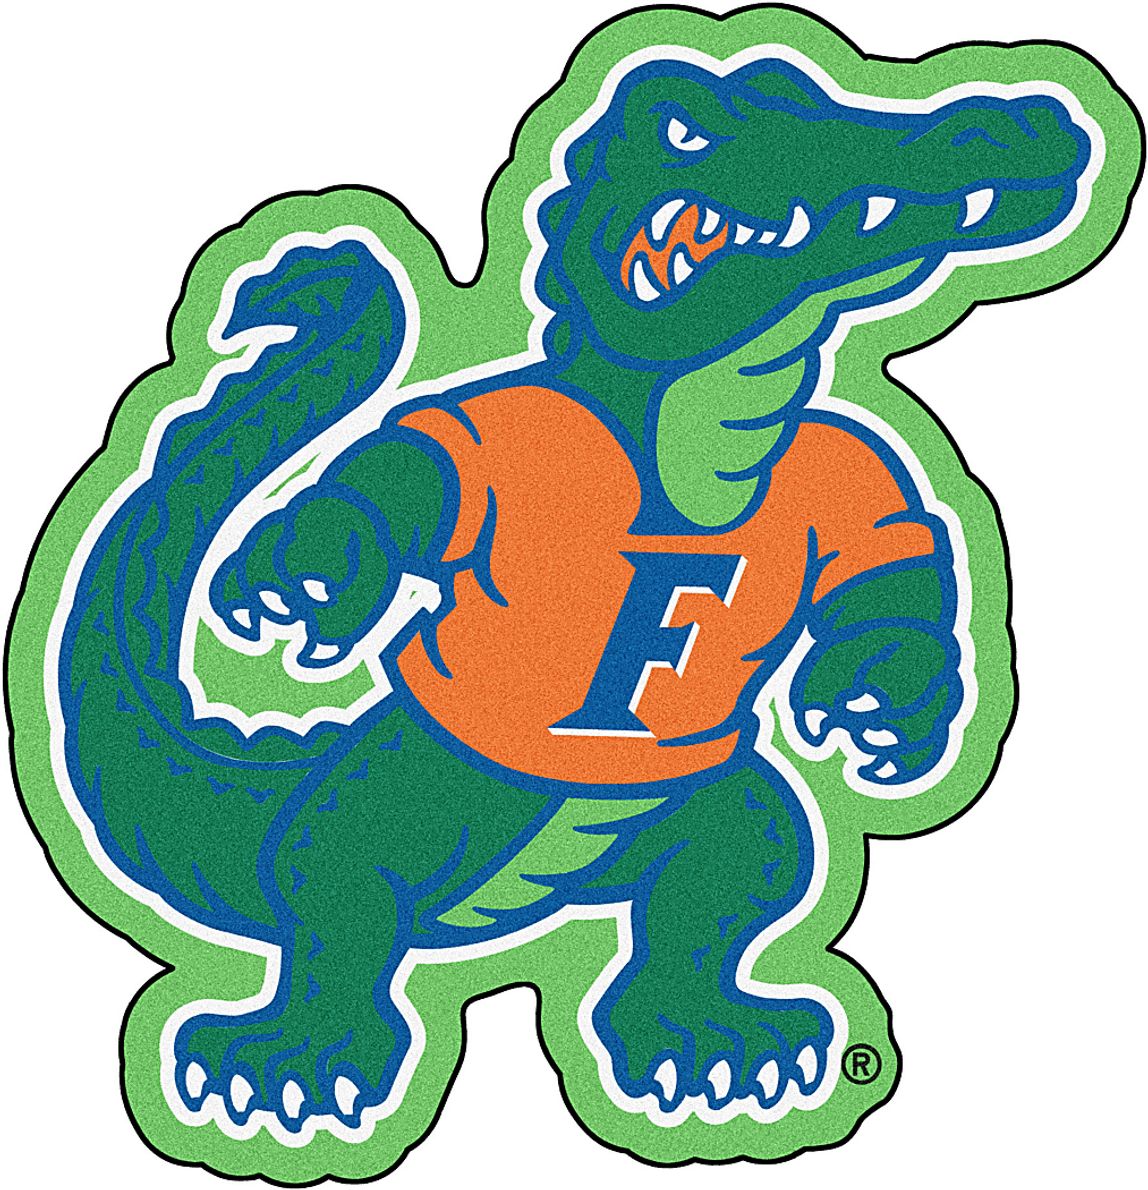 Football Mascot University of Florida 1'6" x 2' Rug